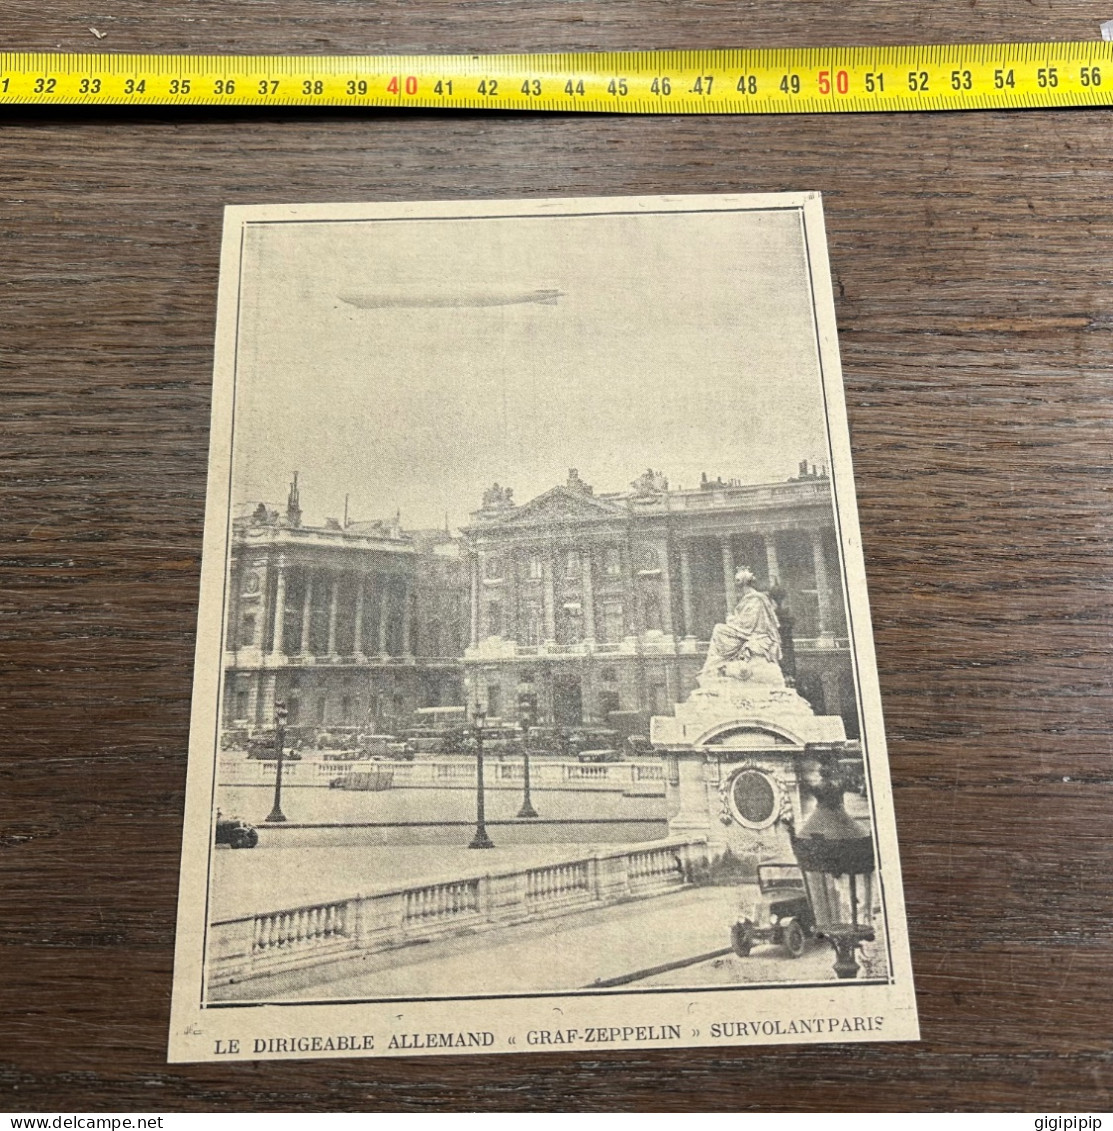 1930 GHI18 DIRIGEABLE ALLEMAND « GRAF-ZEPPELIN » SURVOLANT PARIS - Collections